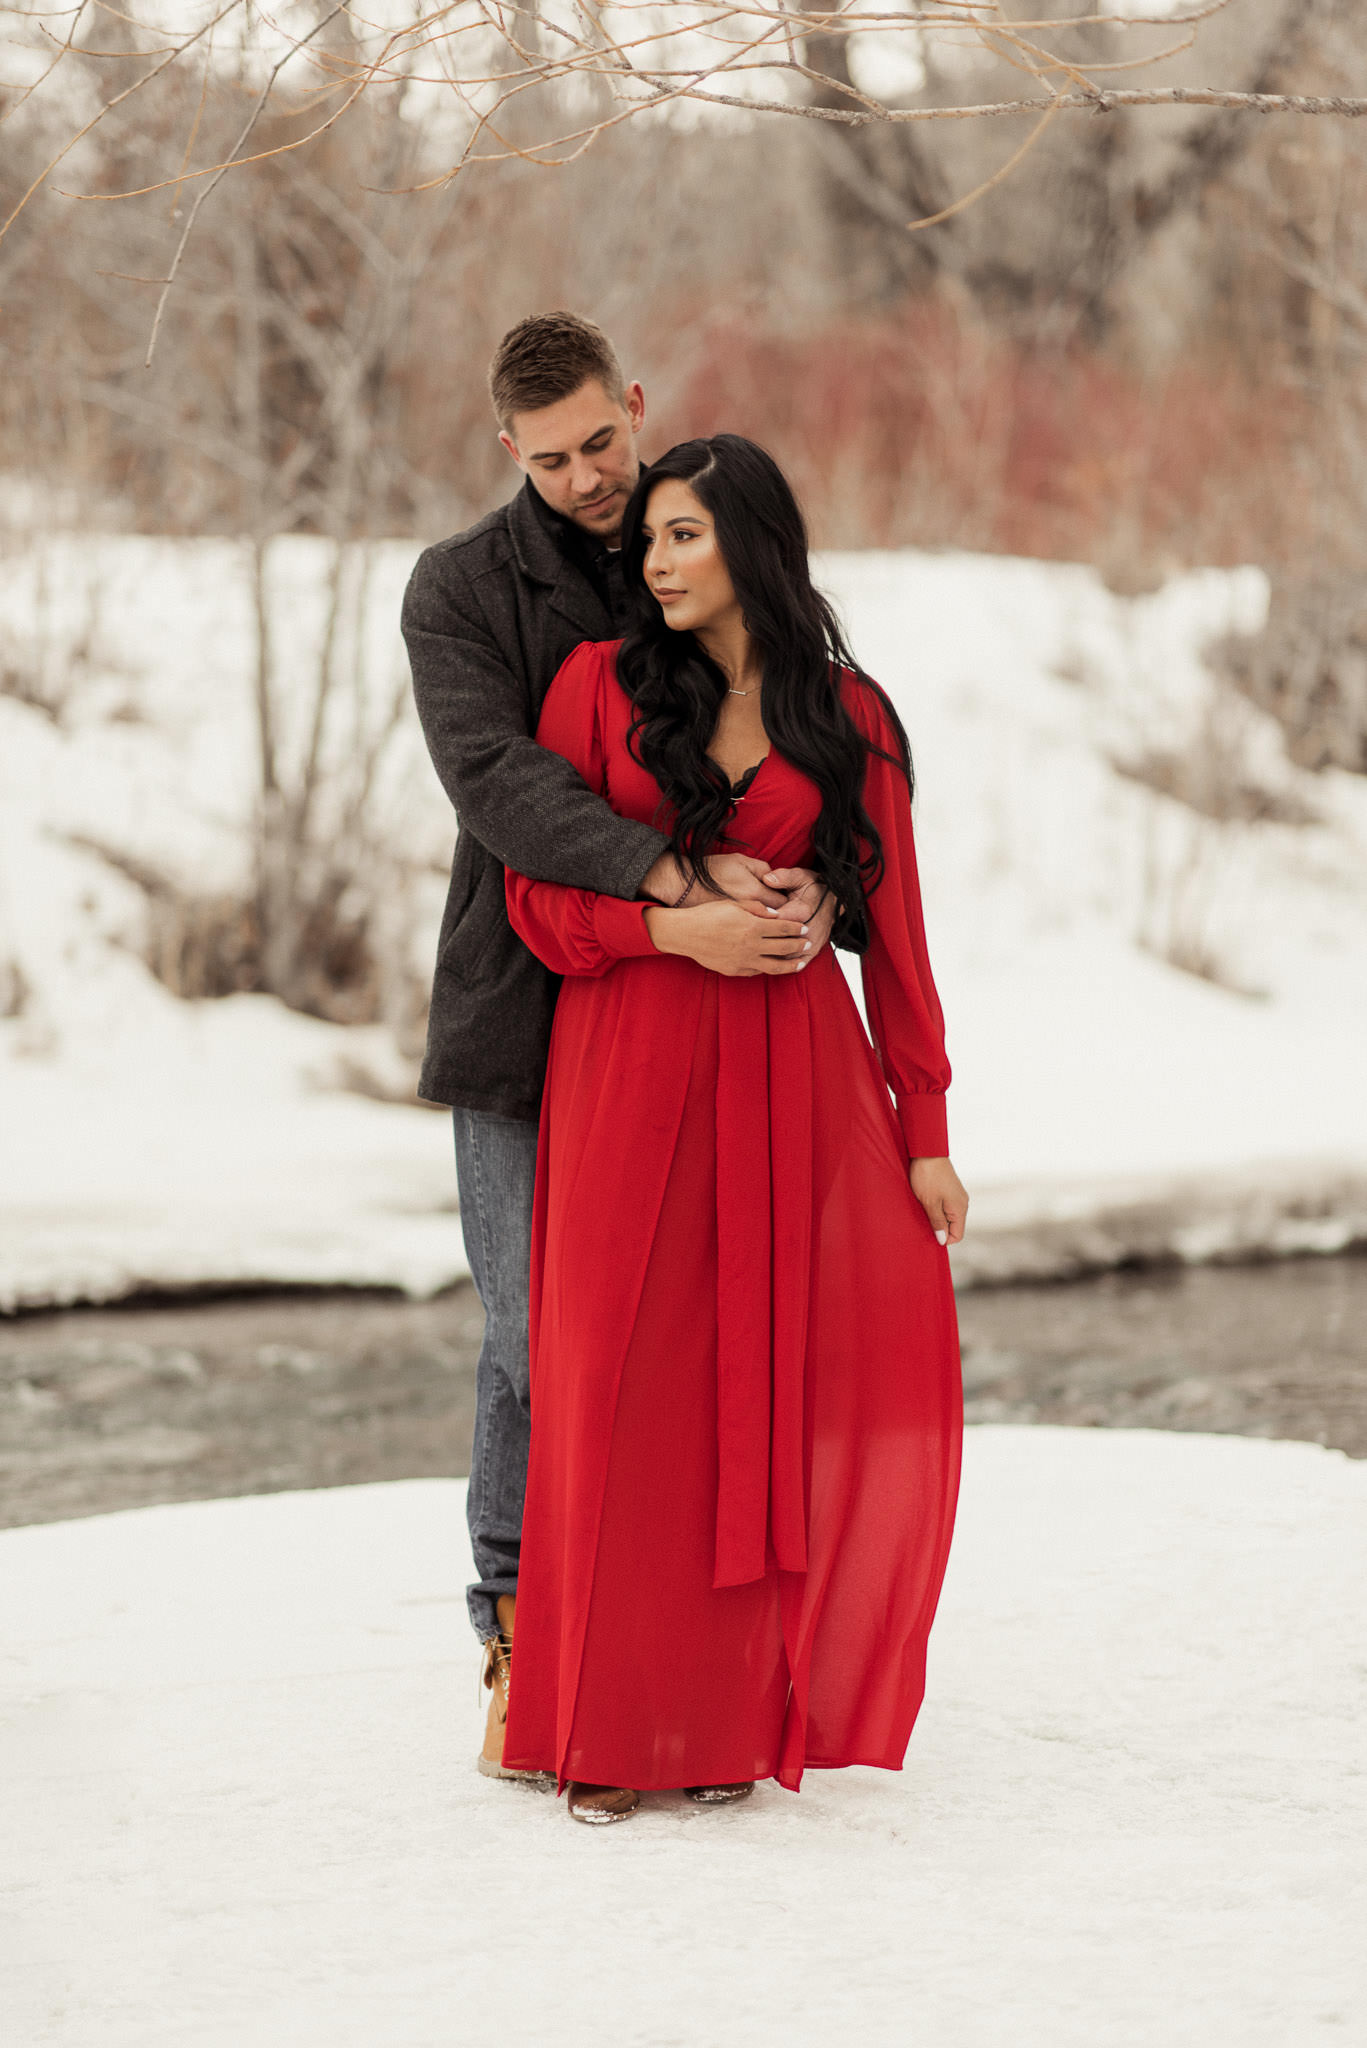 sandra-ryan-colorado-winter-snow-engagement-couples-valentines-red-houston-photographer-sm-19.jpg